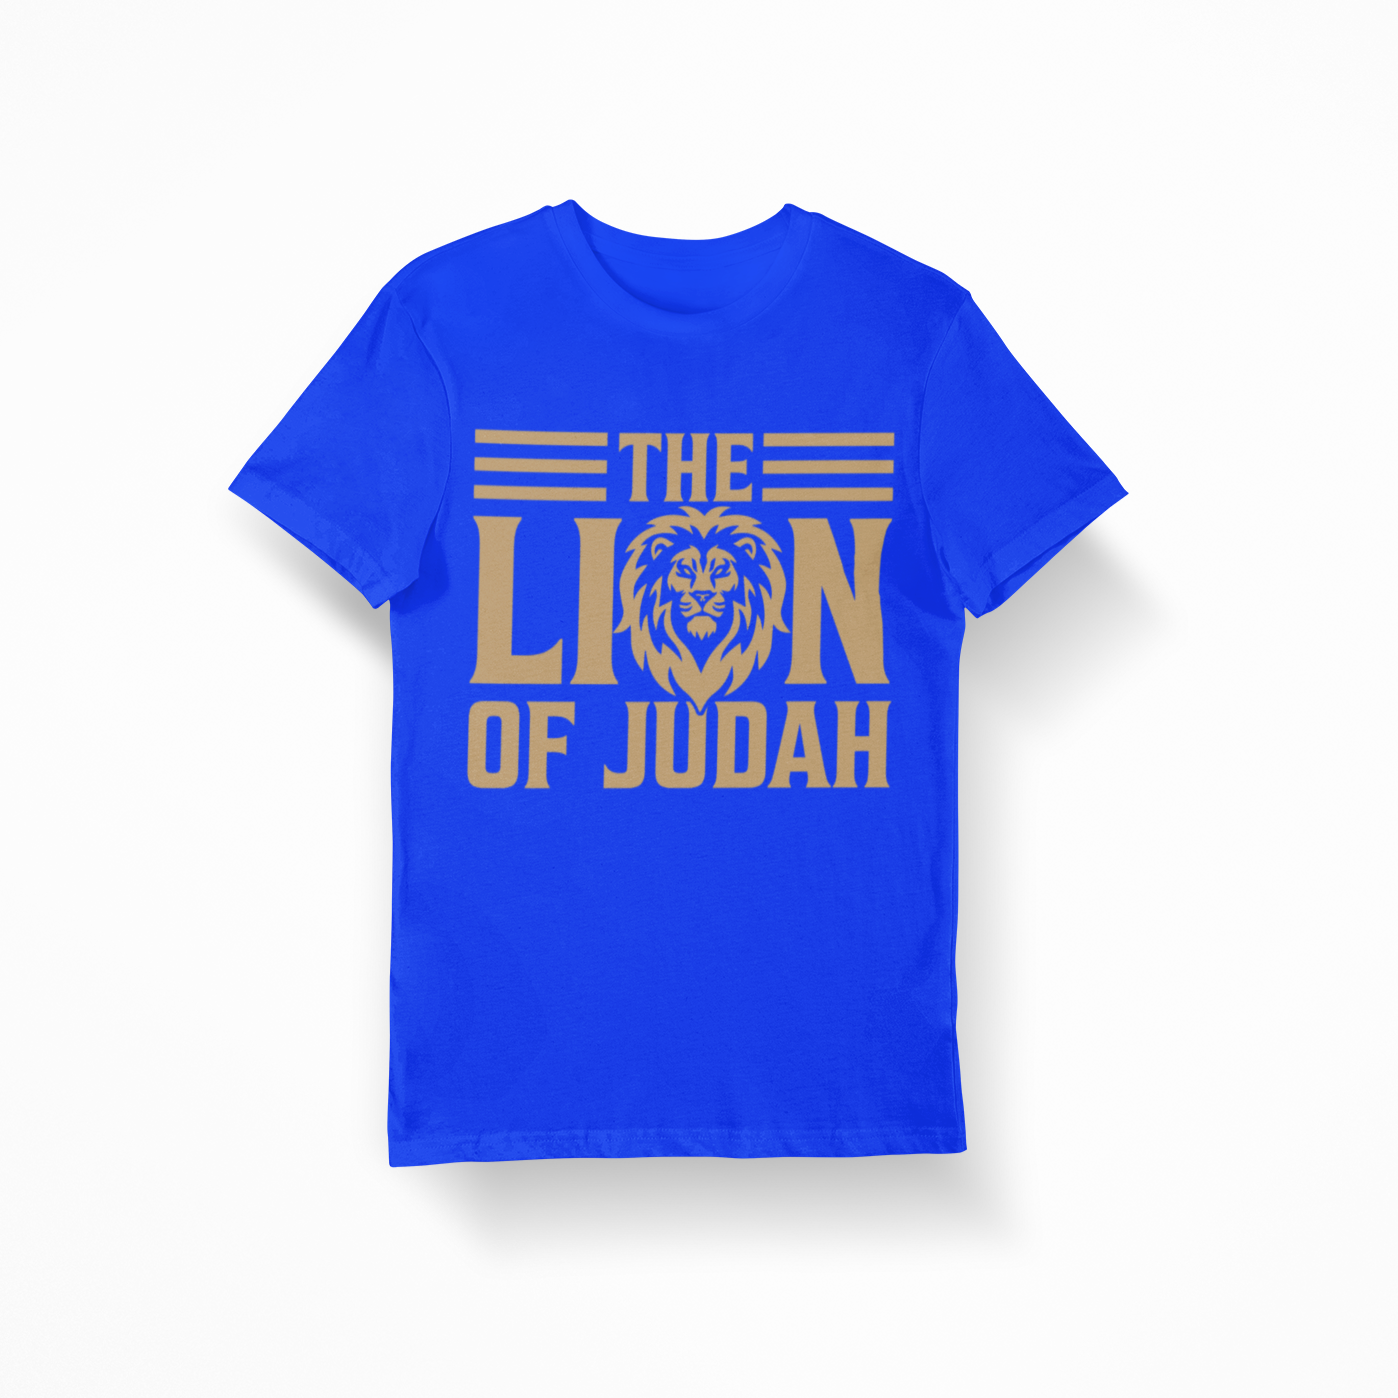 THE LION OF JUDAH T-SHIRT